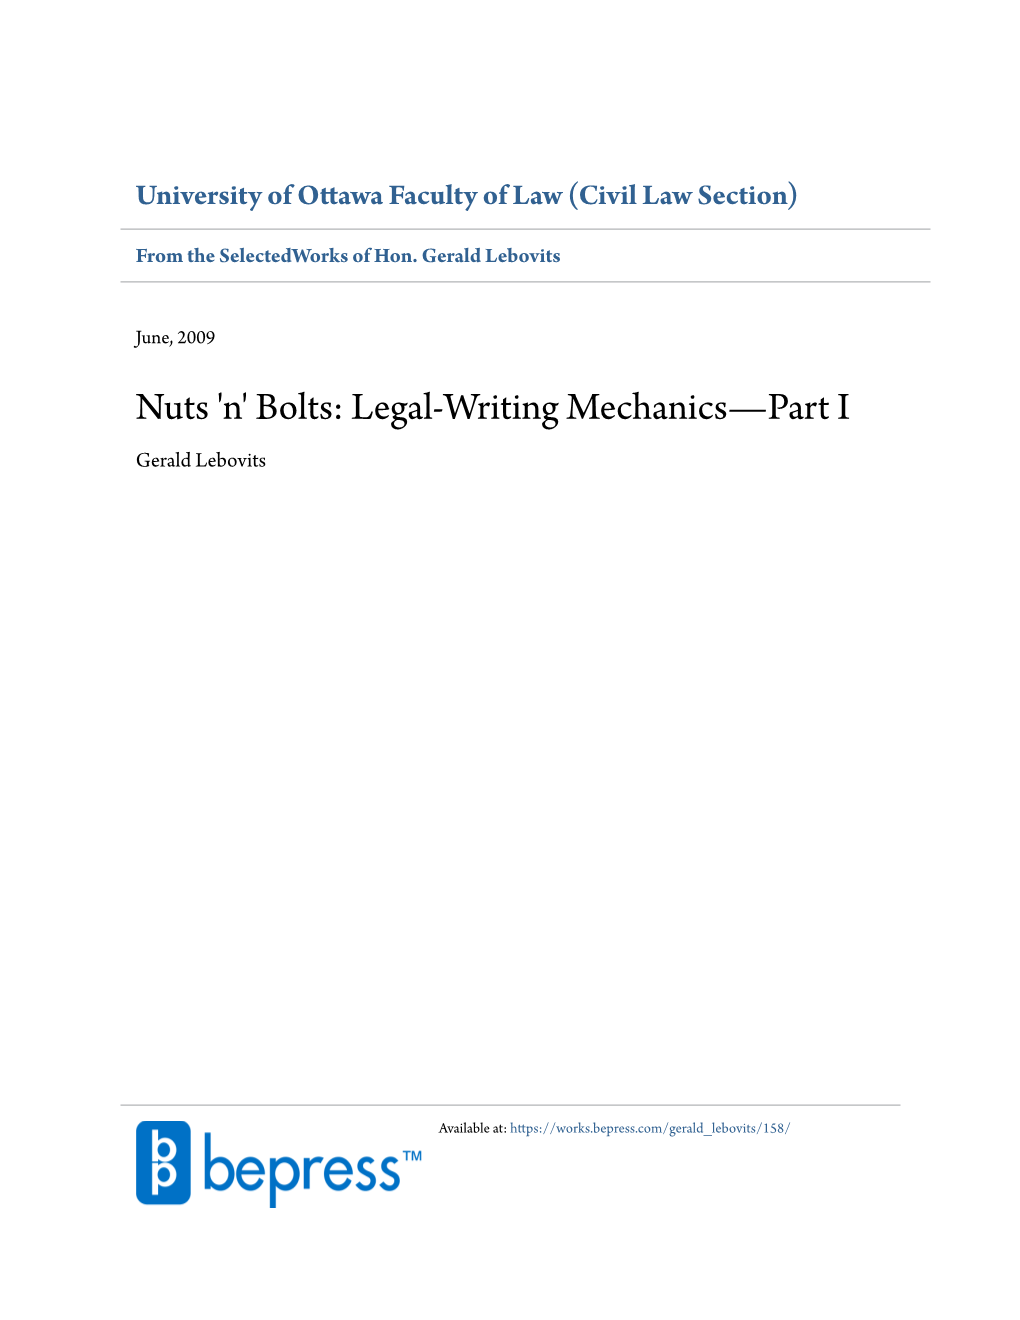 Nuts 'N' Bolts: Legal-Writing Mechanics—Part I Gerald Lebovits